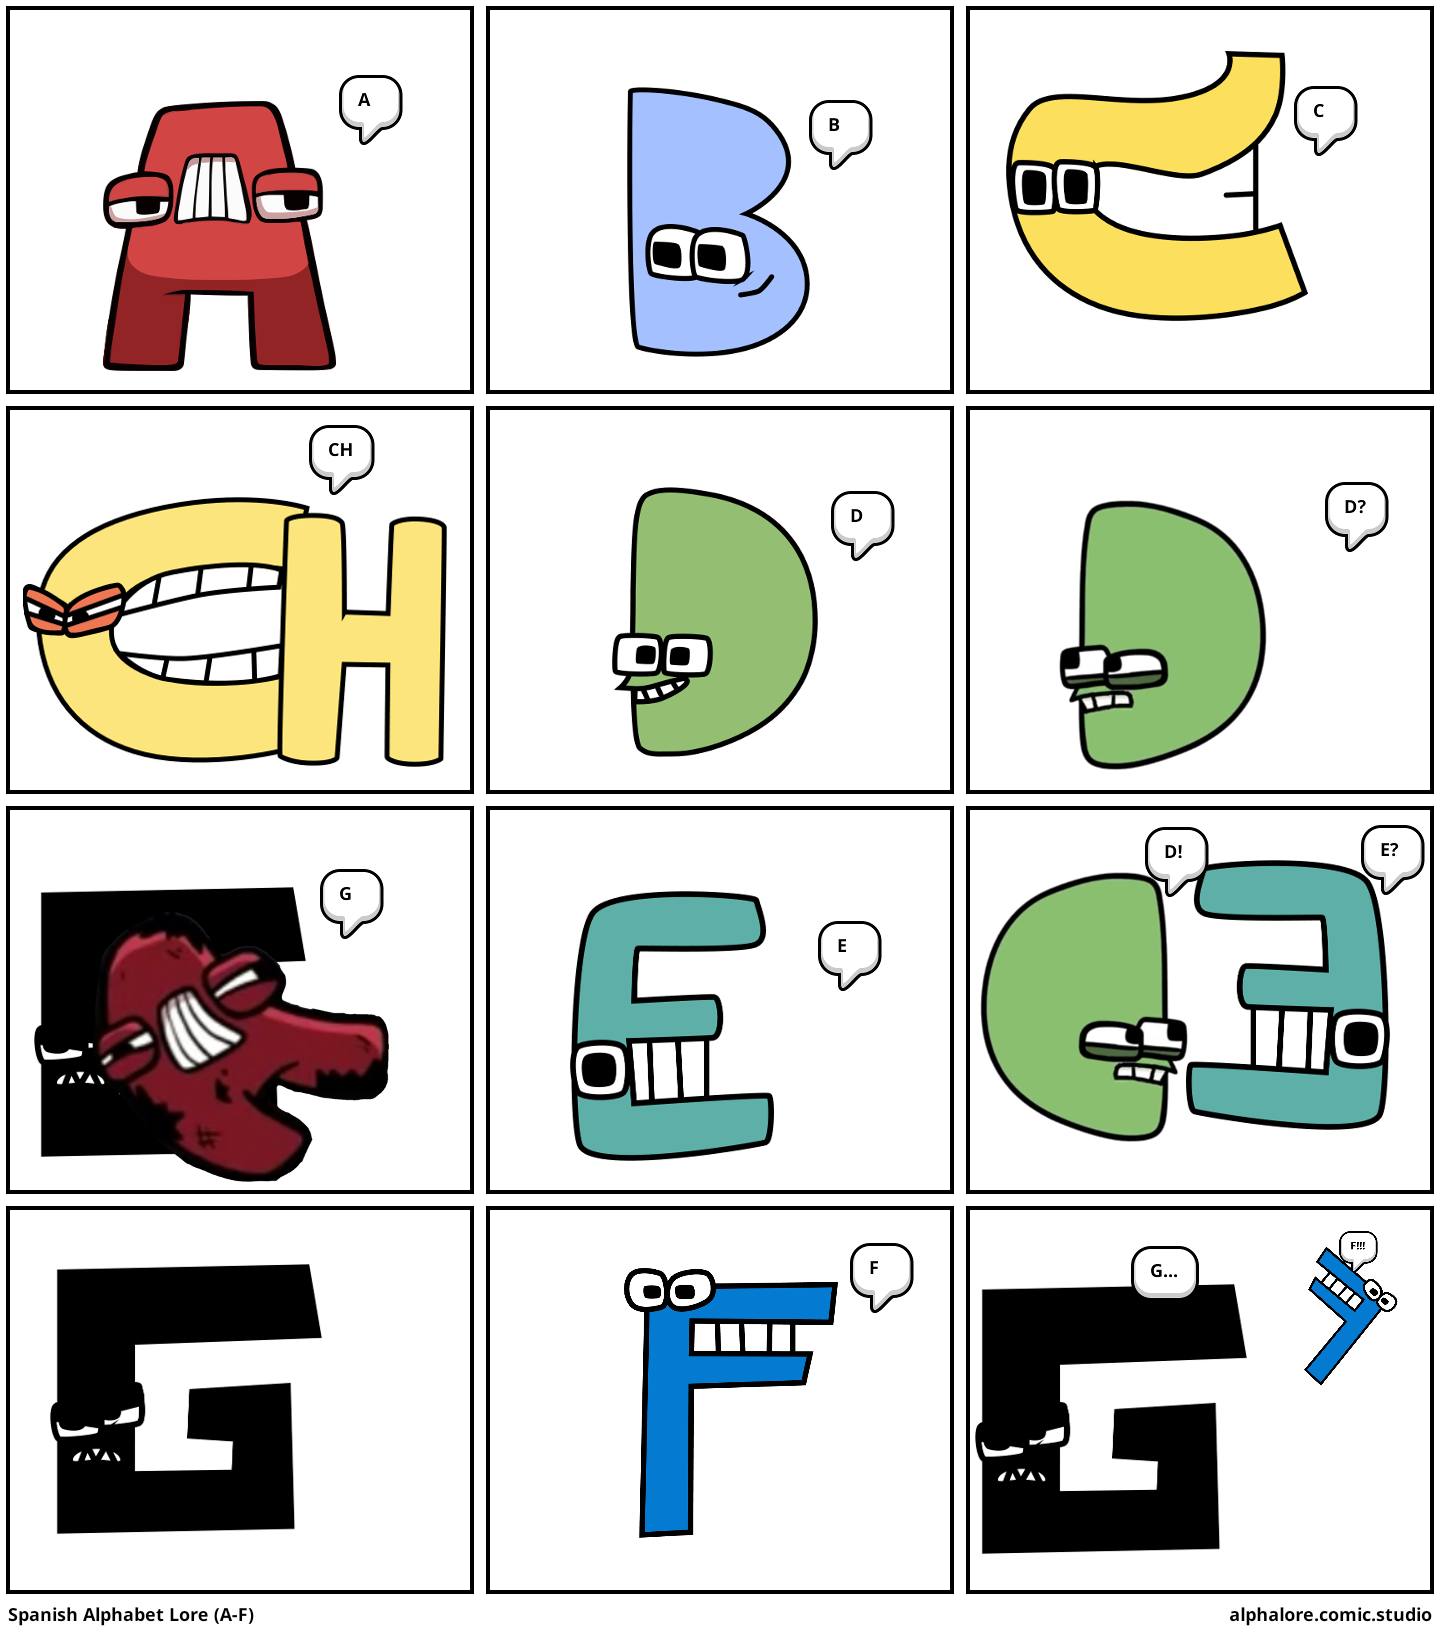 Spanish alphabet lore O. - Comic Studio